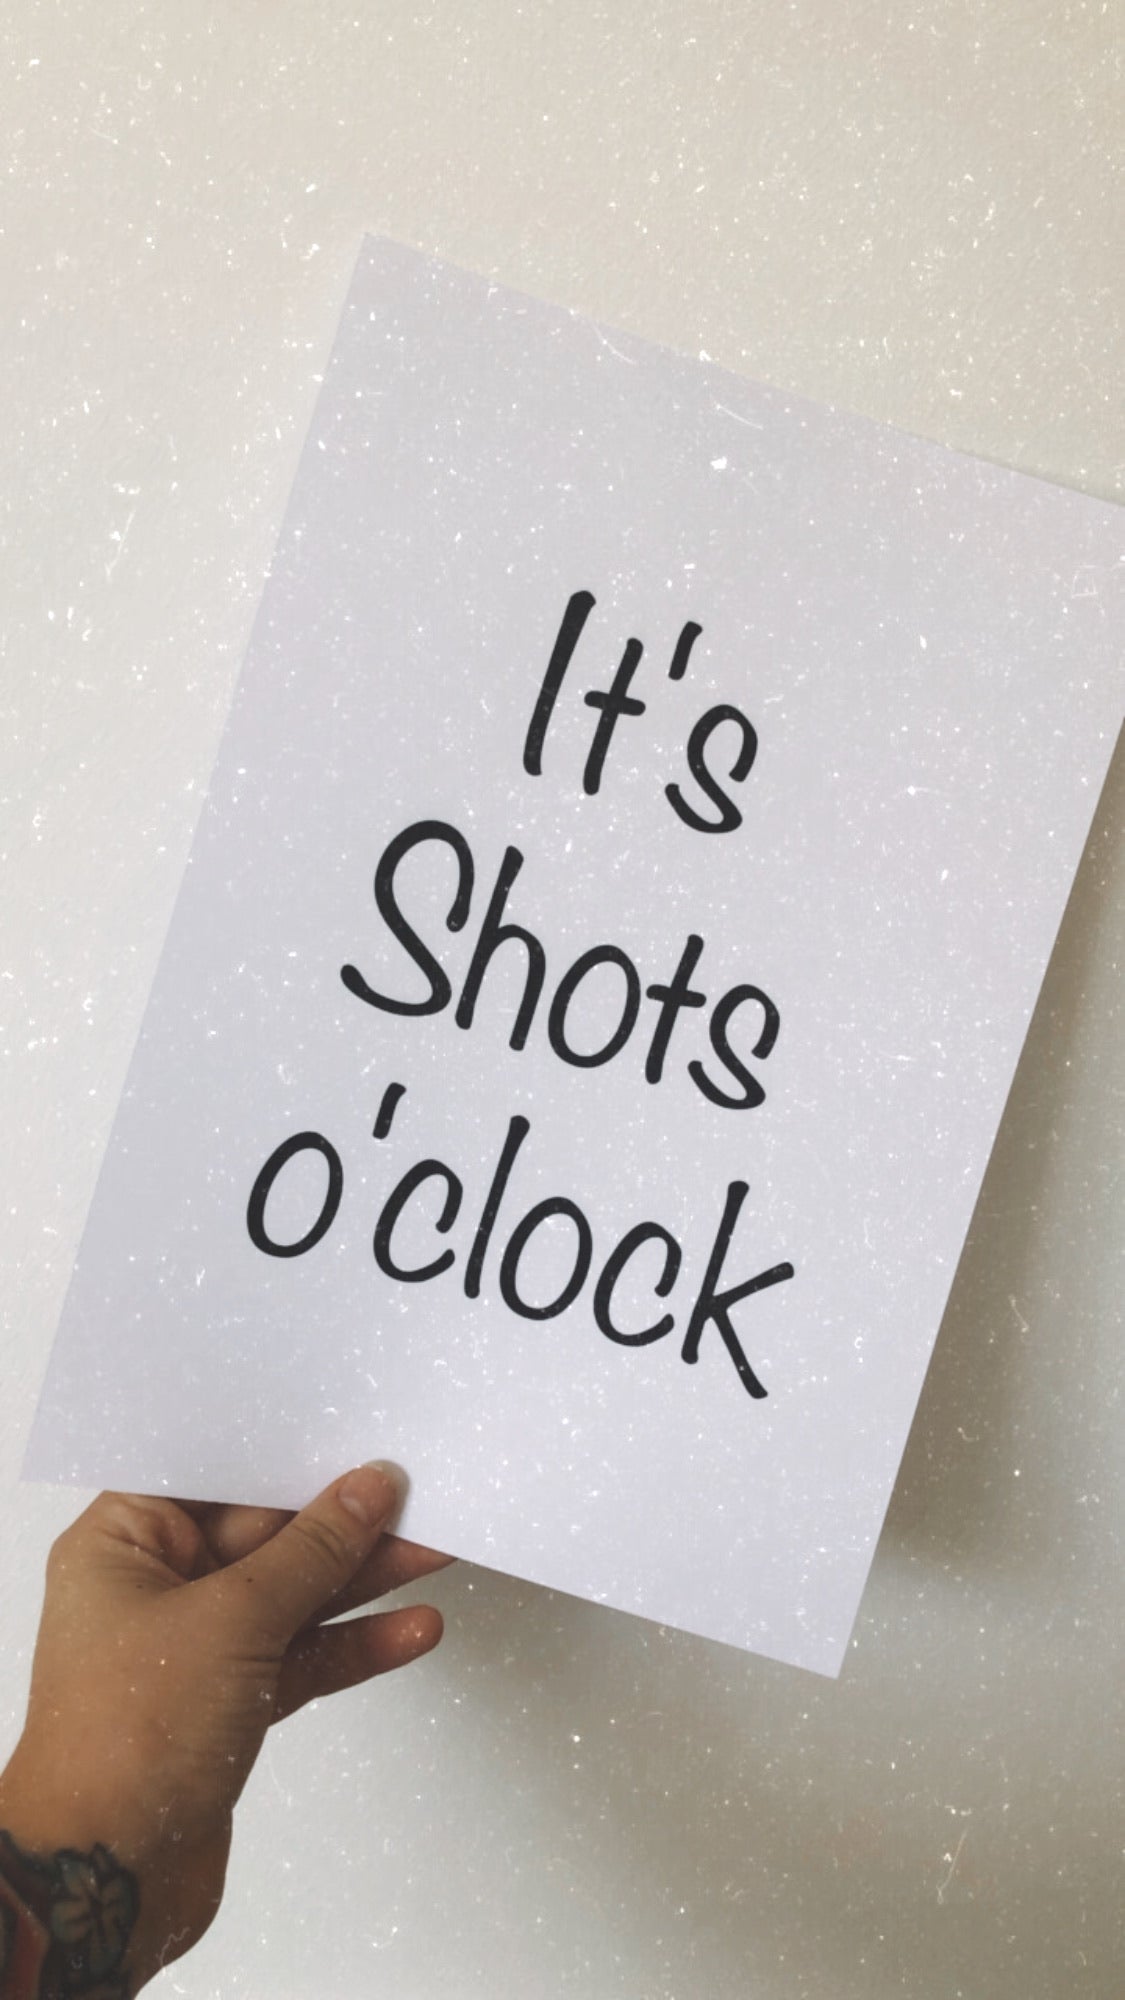 Shots O'clock Alcohol Humours Wall Decor Print